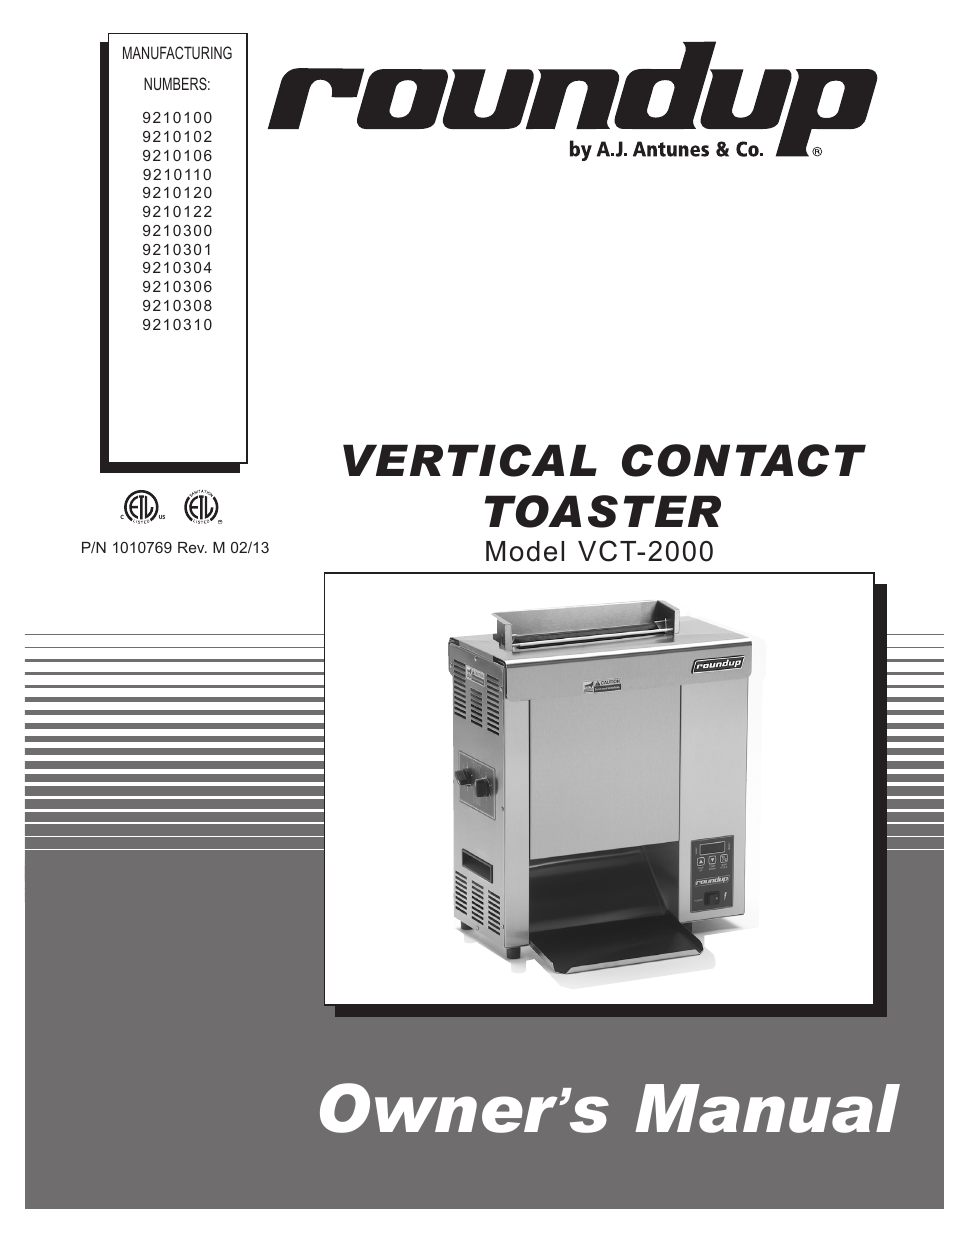 VCT-2000 9210310